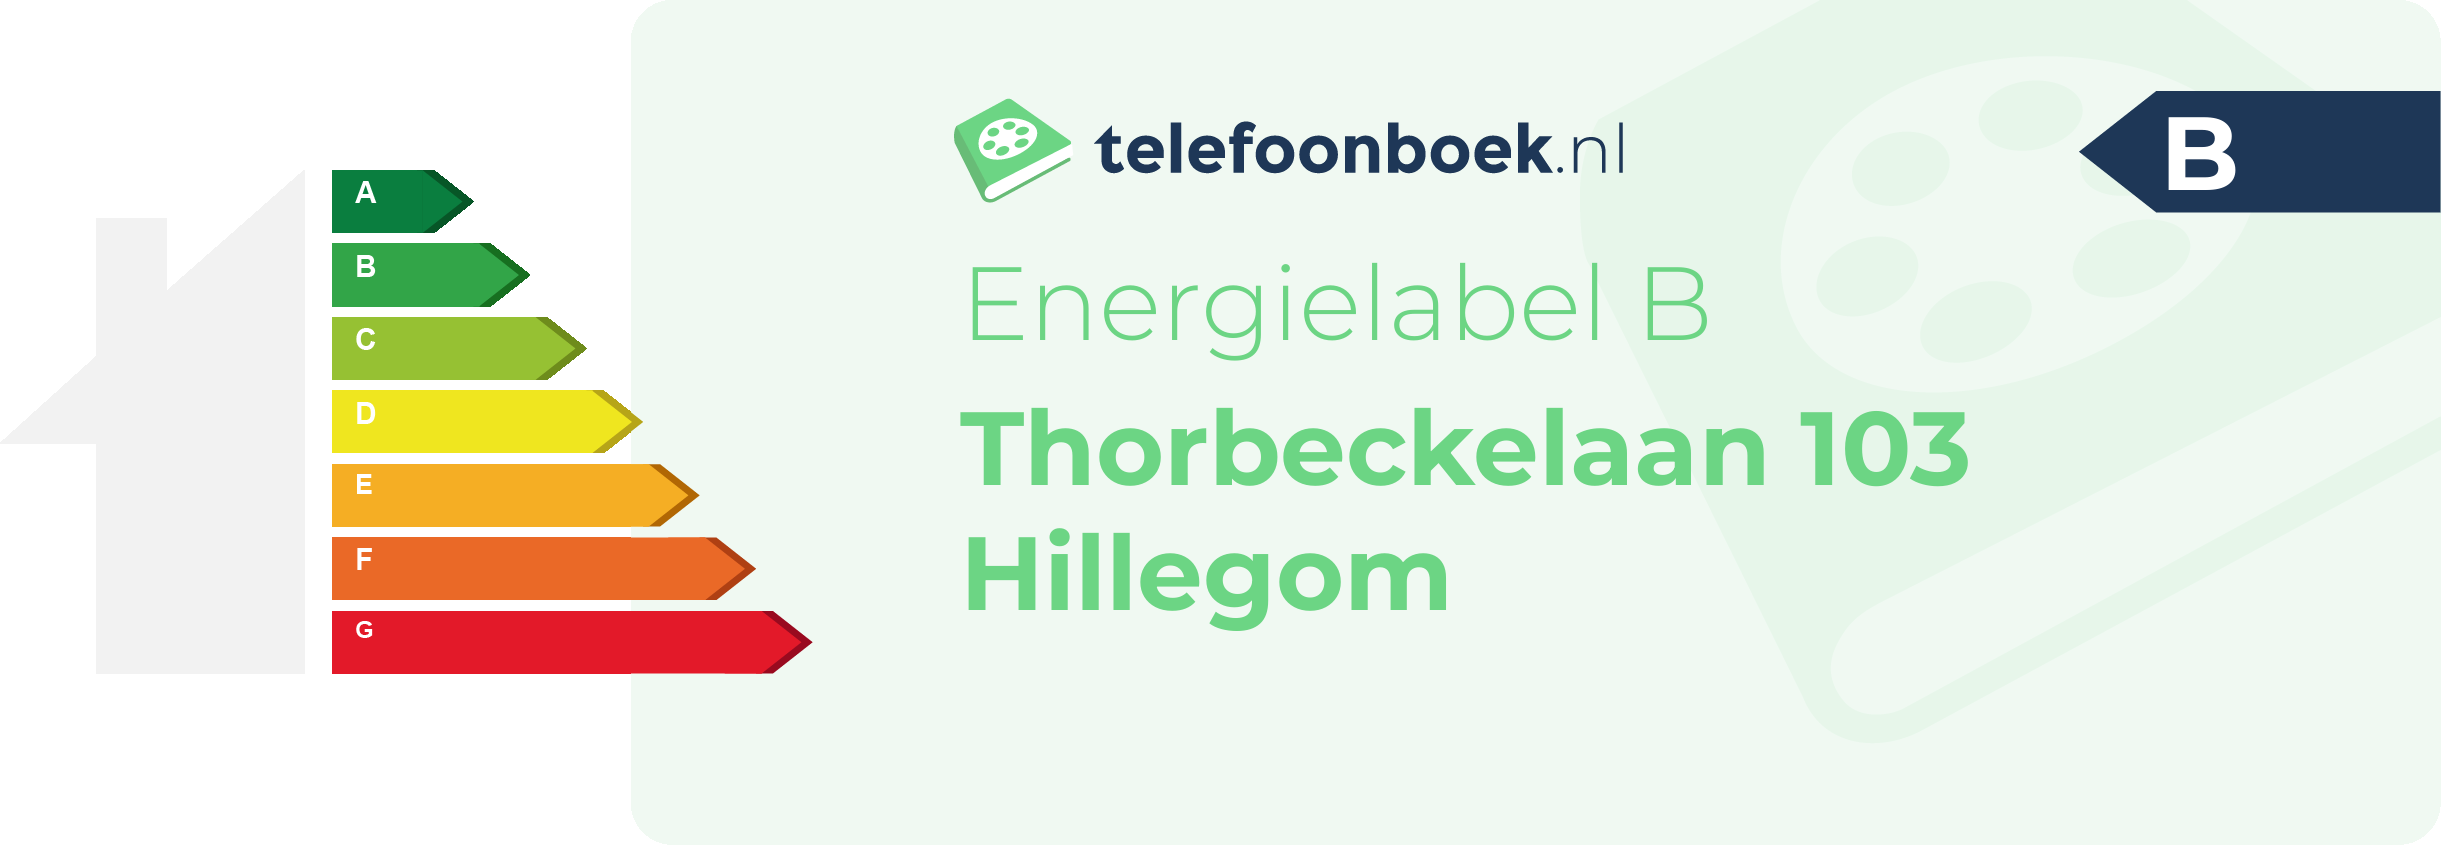 Energielabel Thorbeckelaan 103 Hillegom